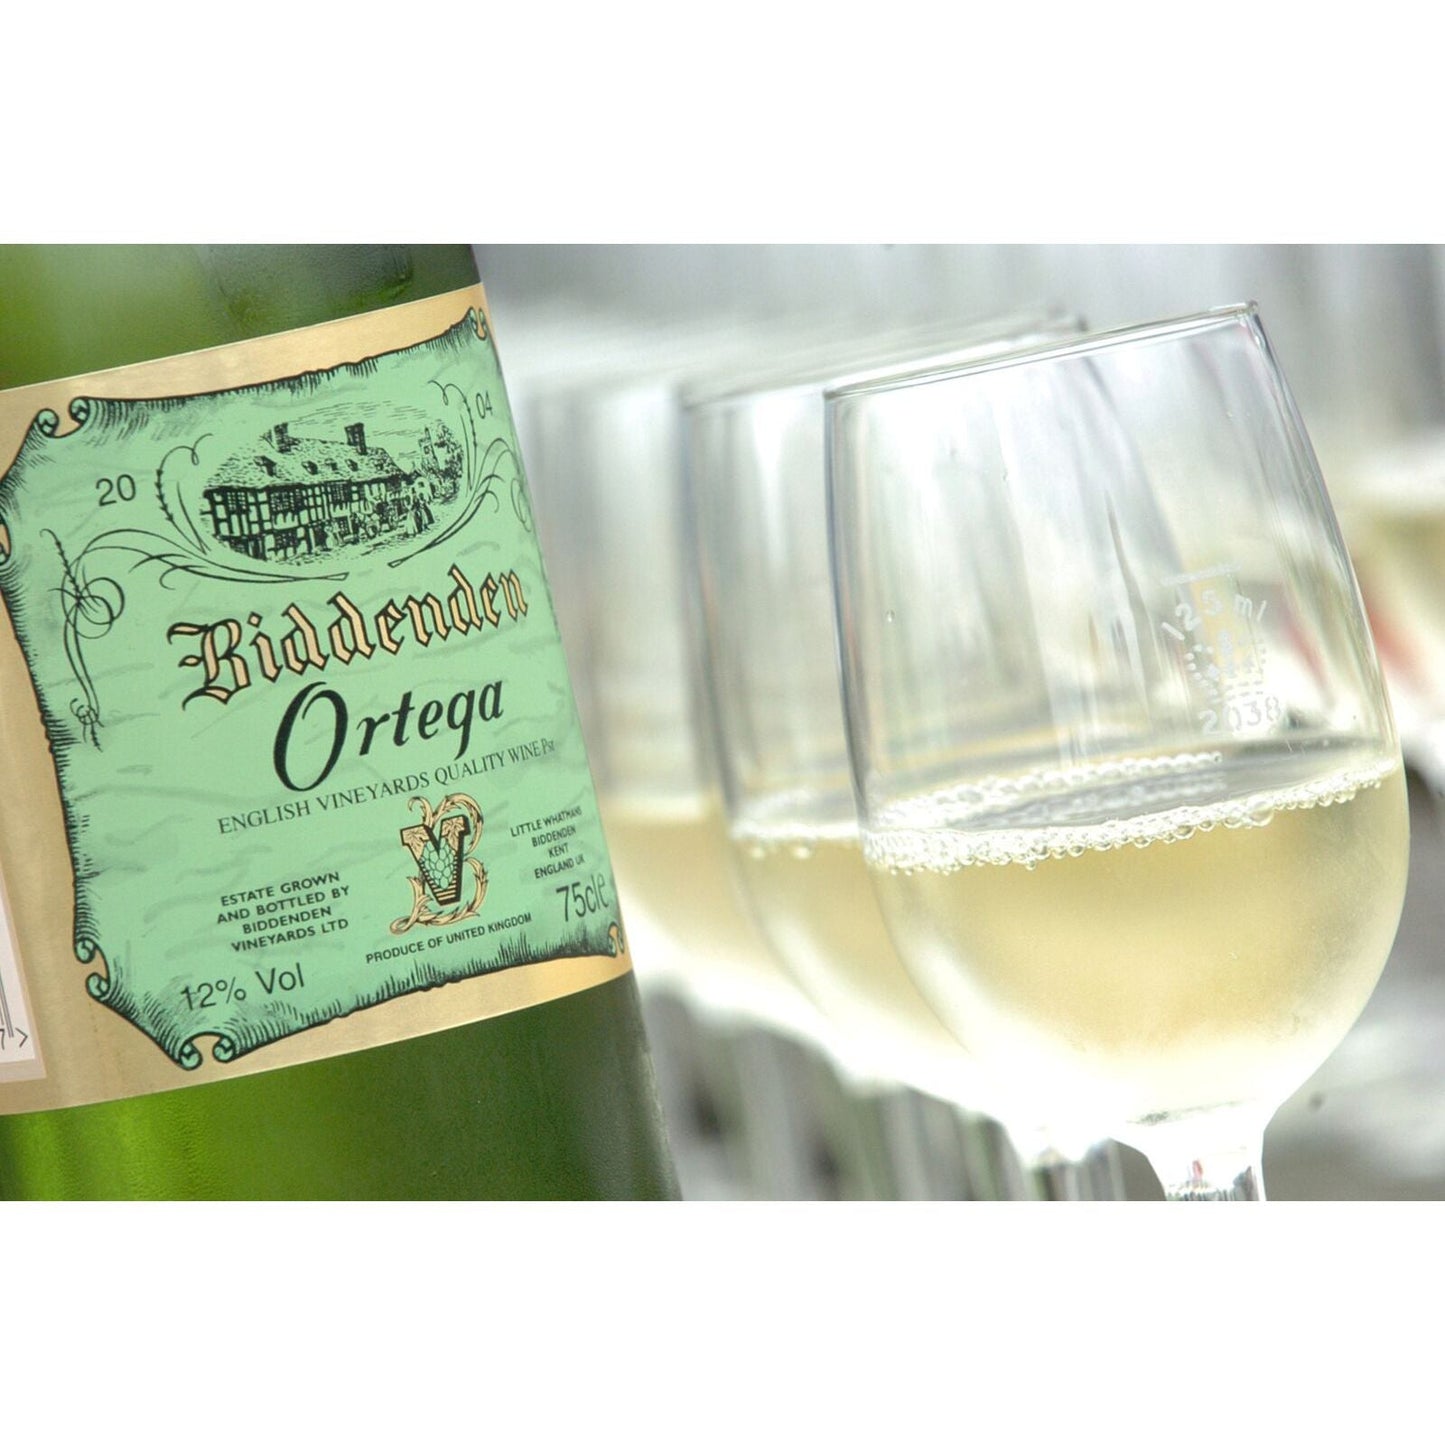 Biddenden Ortega english white wine